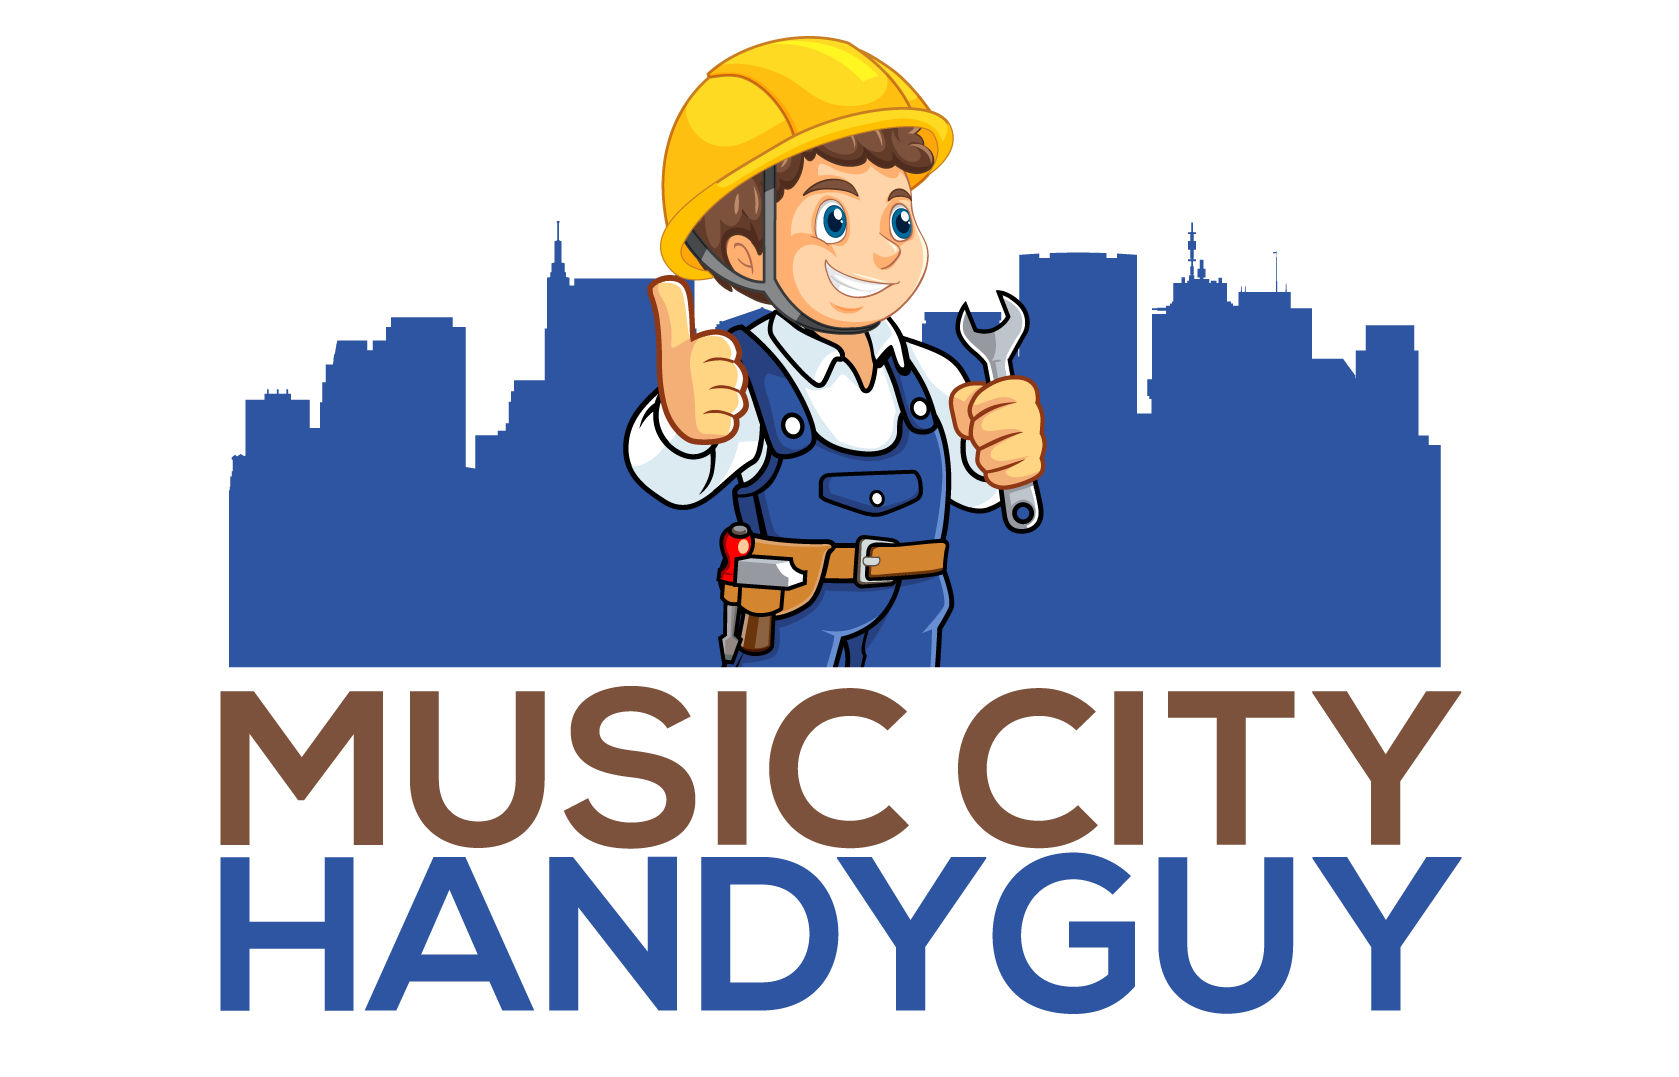 Music City Handy Guy Handyman Services in Nashville TN